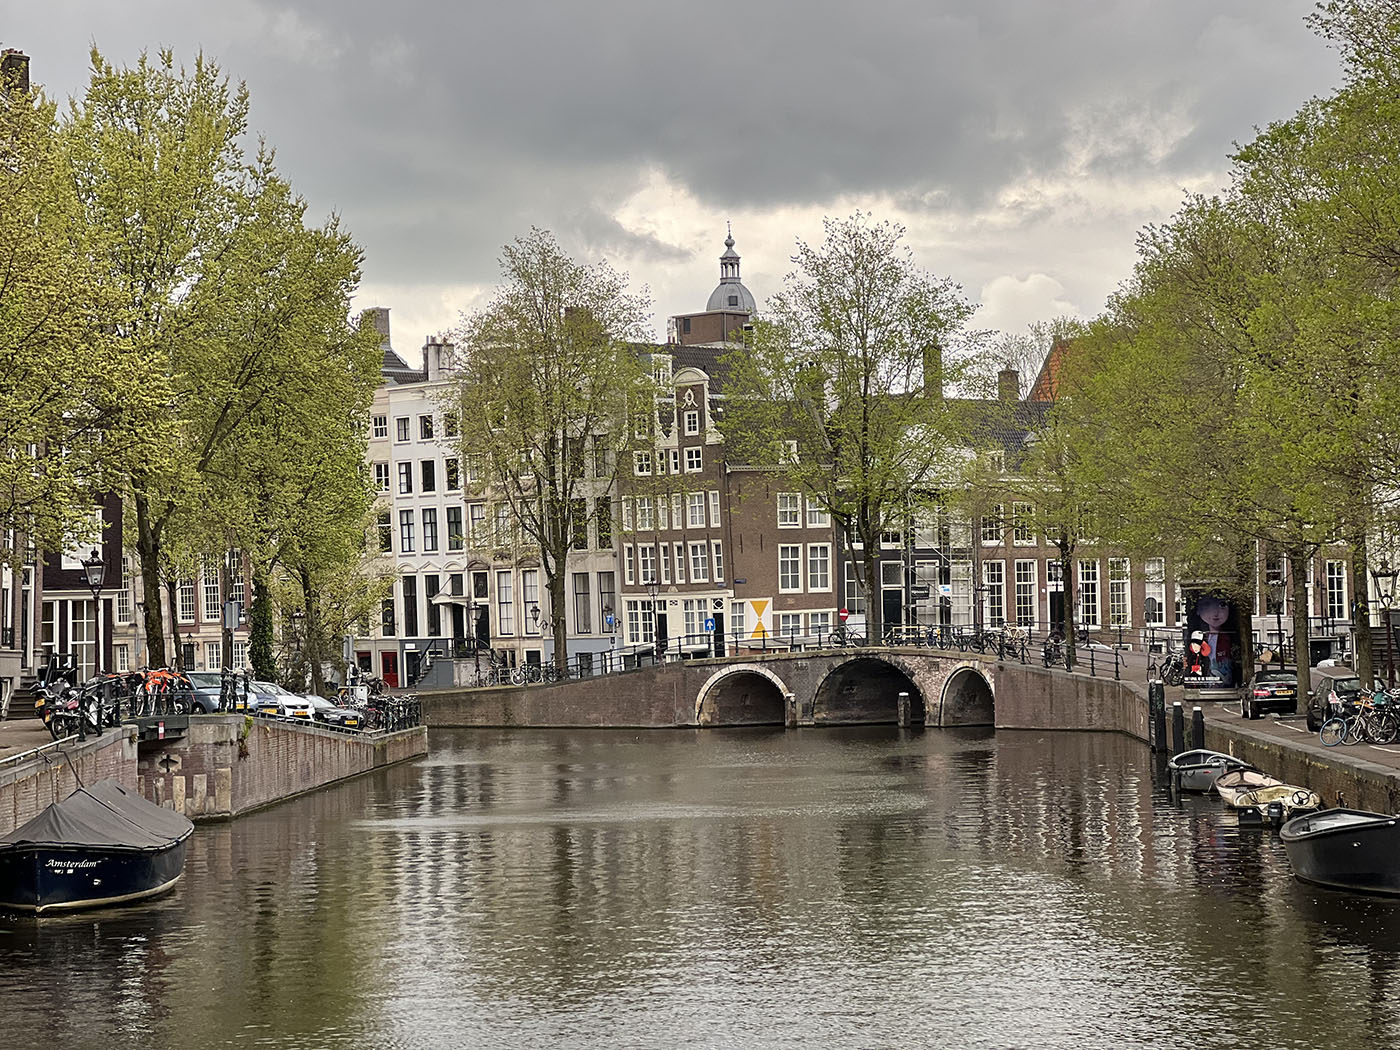 Herengracht. Amsterdam, The Netherlands. Credit: Carolina Valenzuela